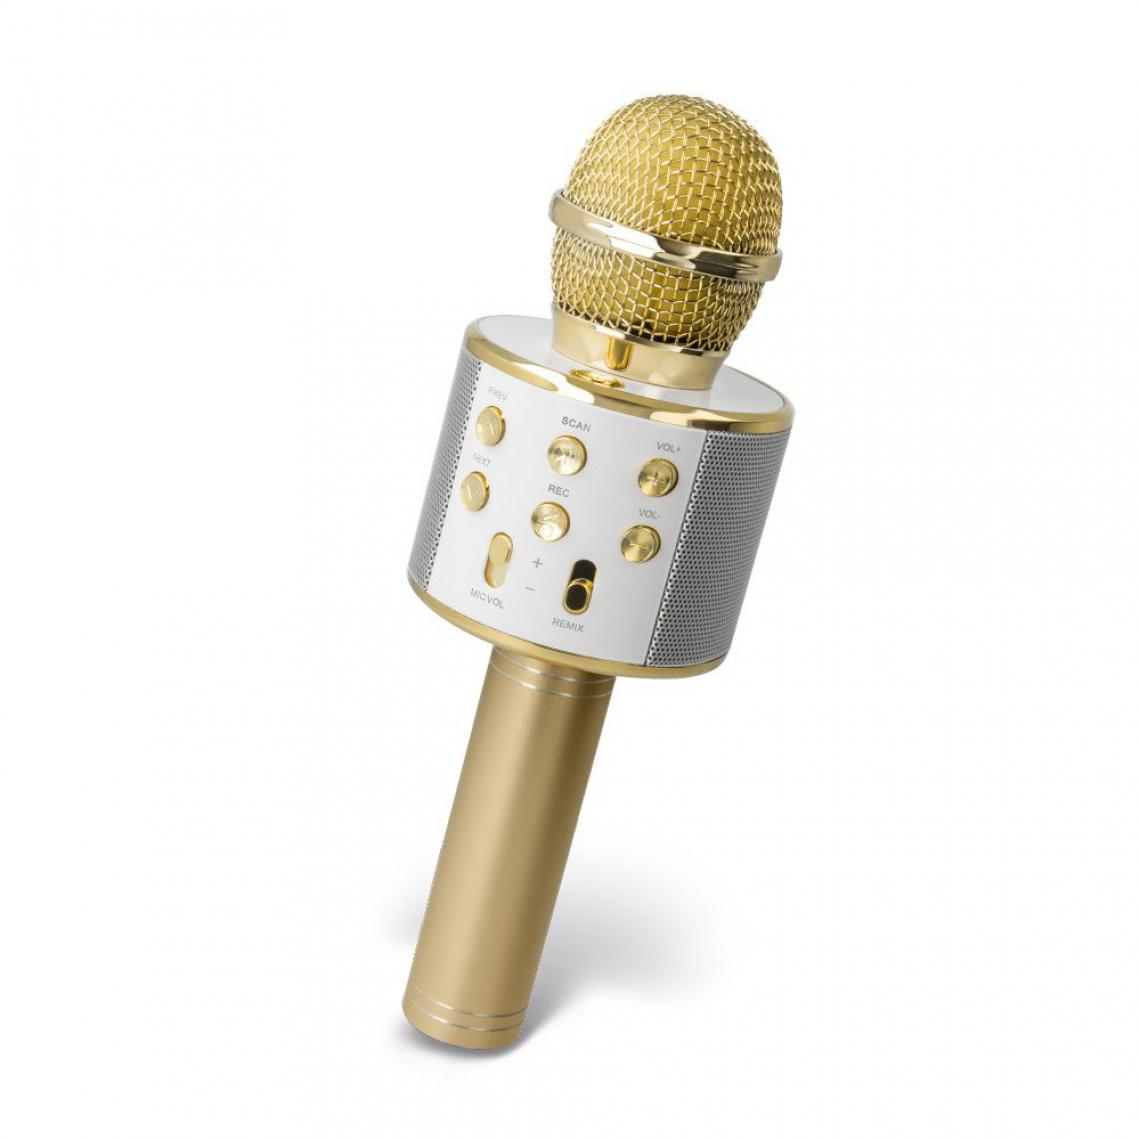 Ozzzo - Microphone Karaoke bluetooth haut parleur ozzzo Gold Or pour Voyo Vbook V2 - Autres accessoires smartphone